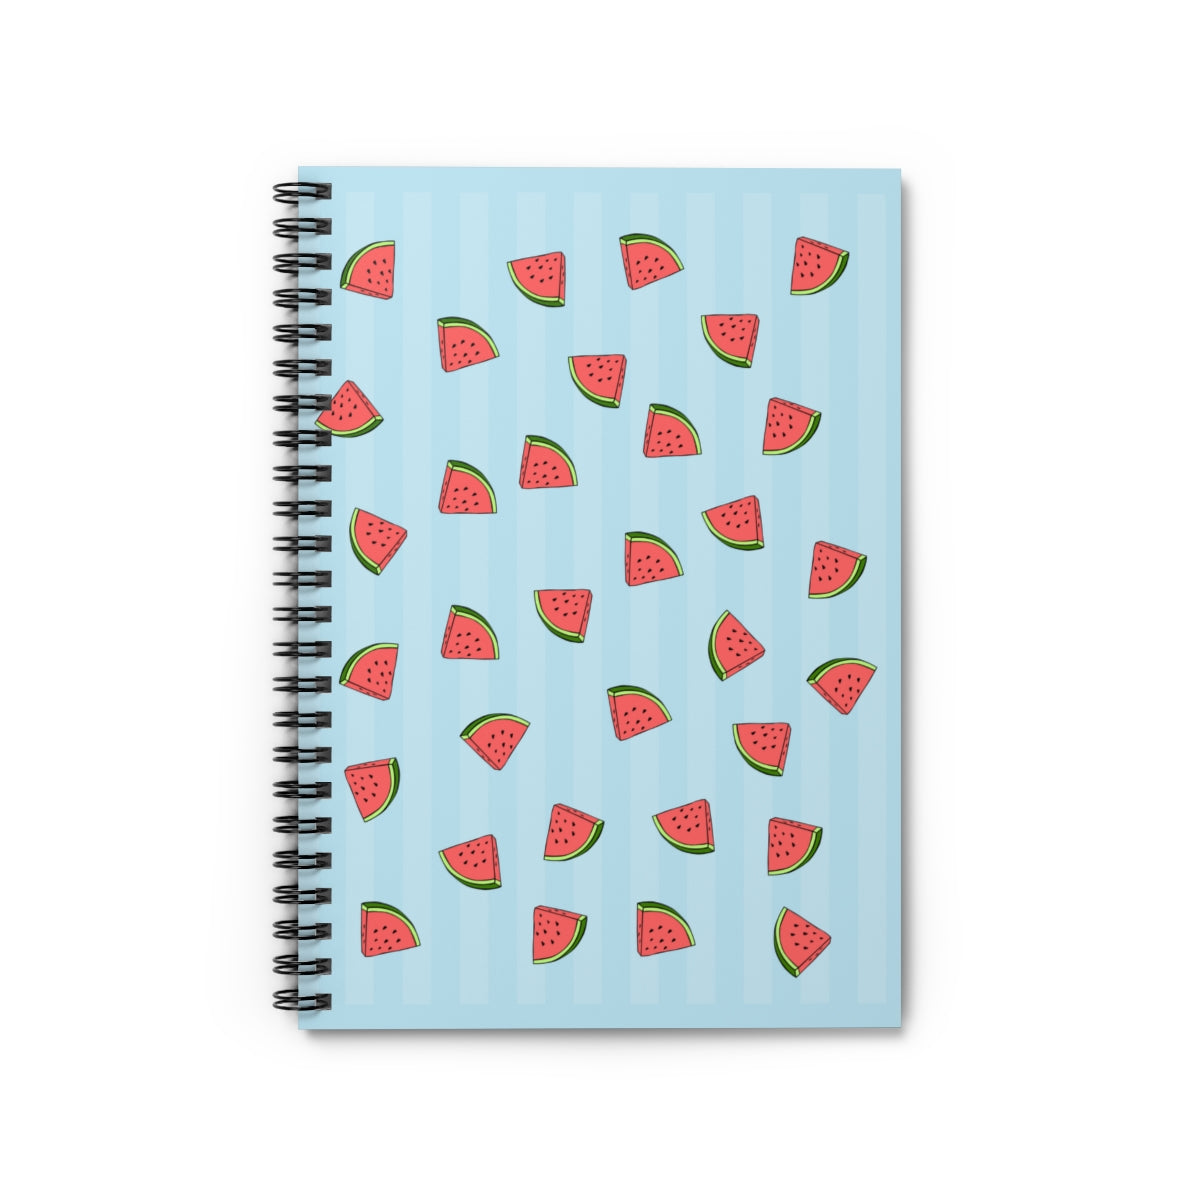 Watermelon Pattern Spiral Notebook - Ruled Line